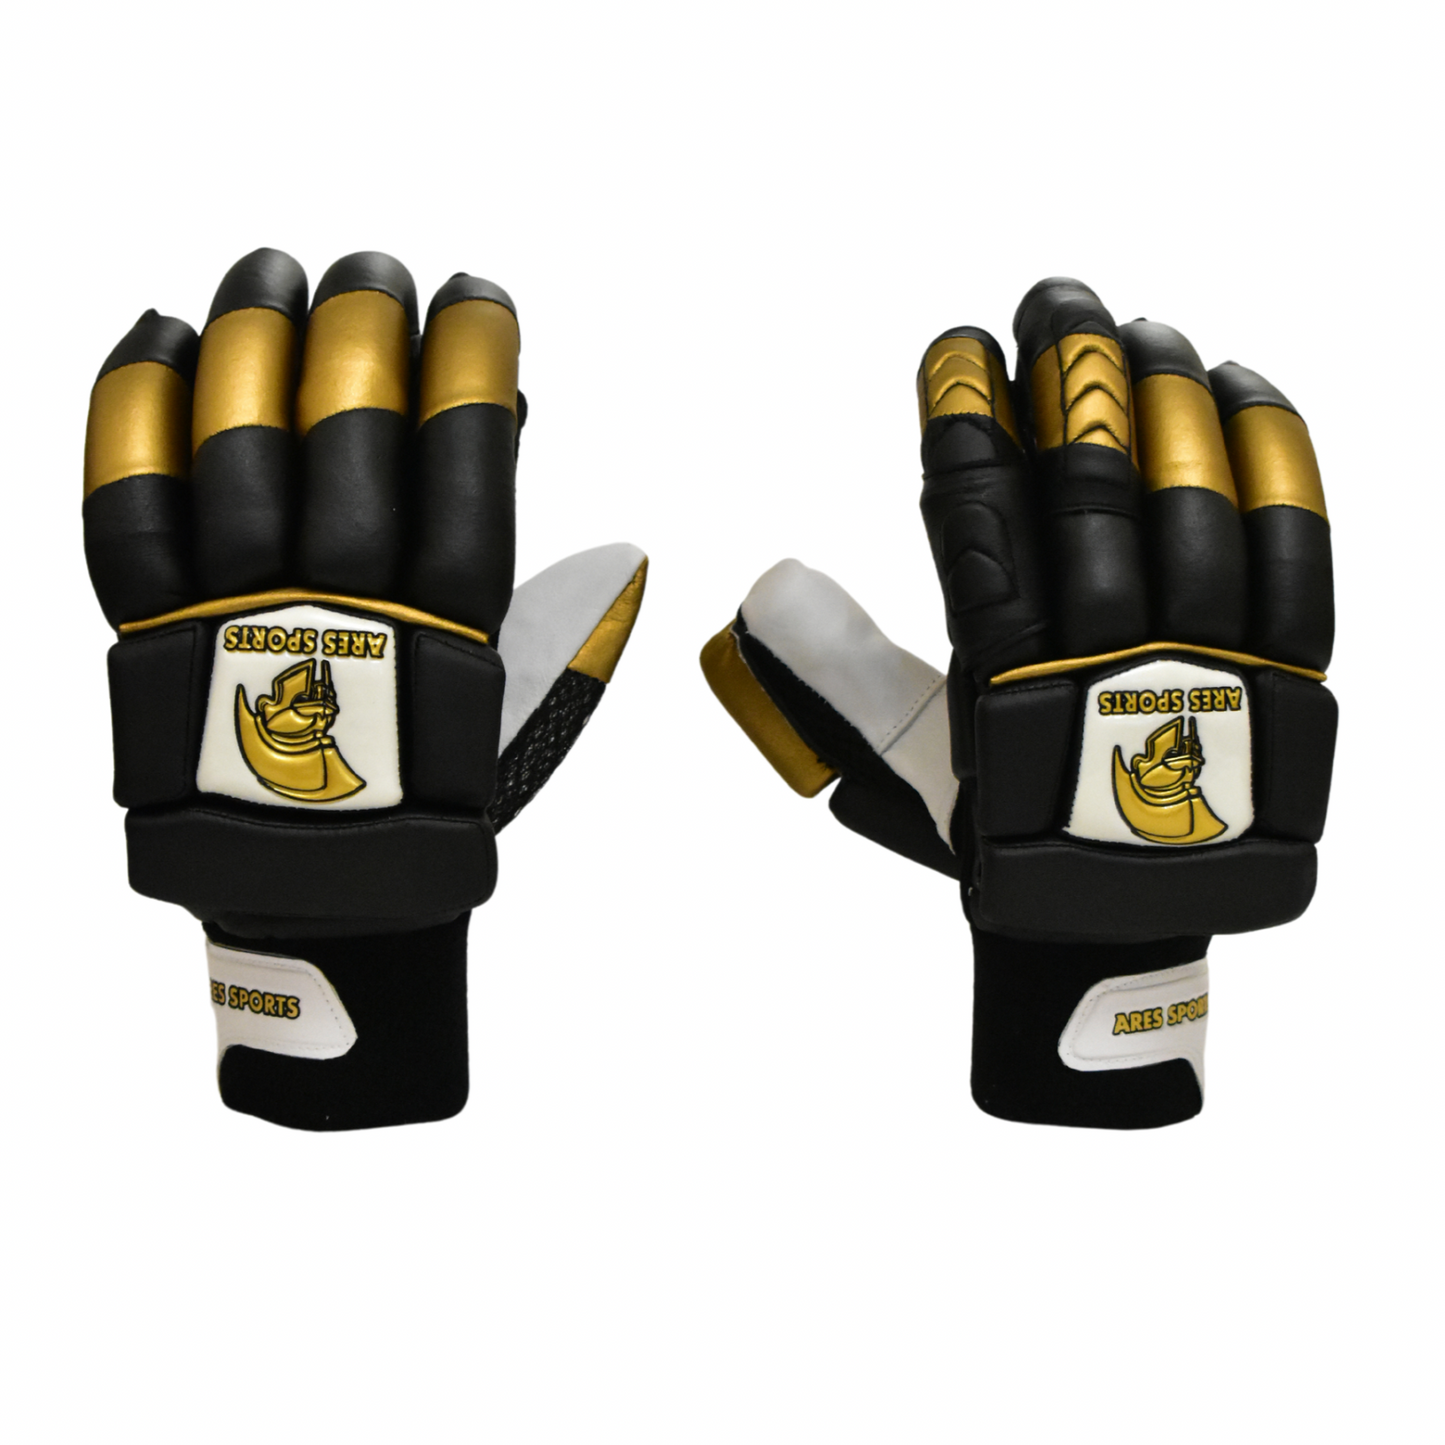 Ares Sports Cricket Batting Gloves Black/Gold